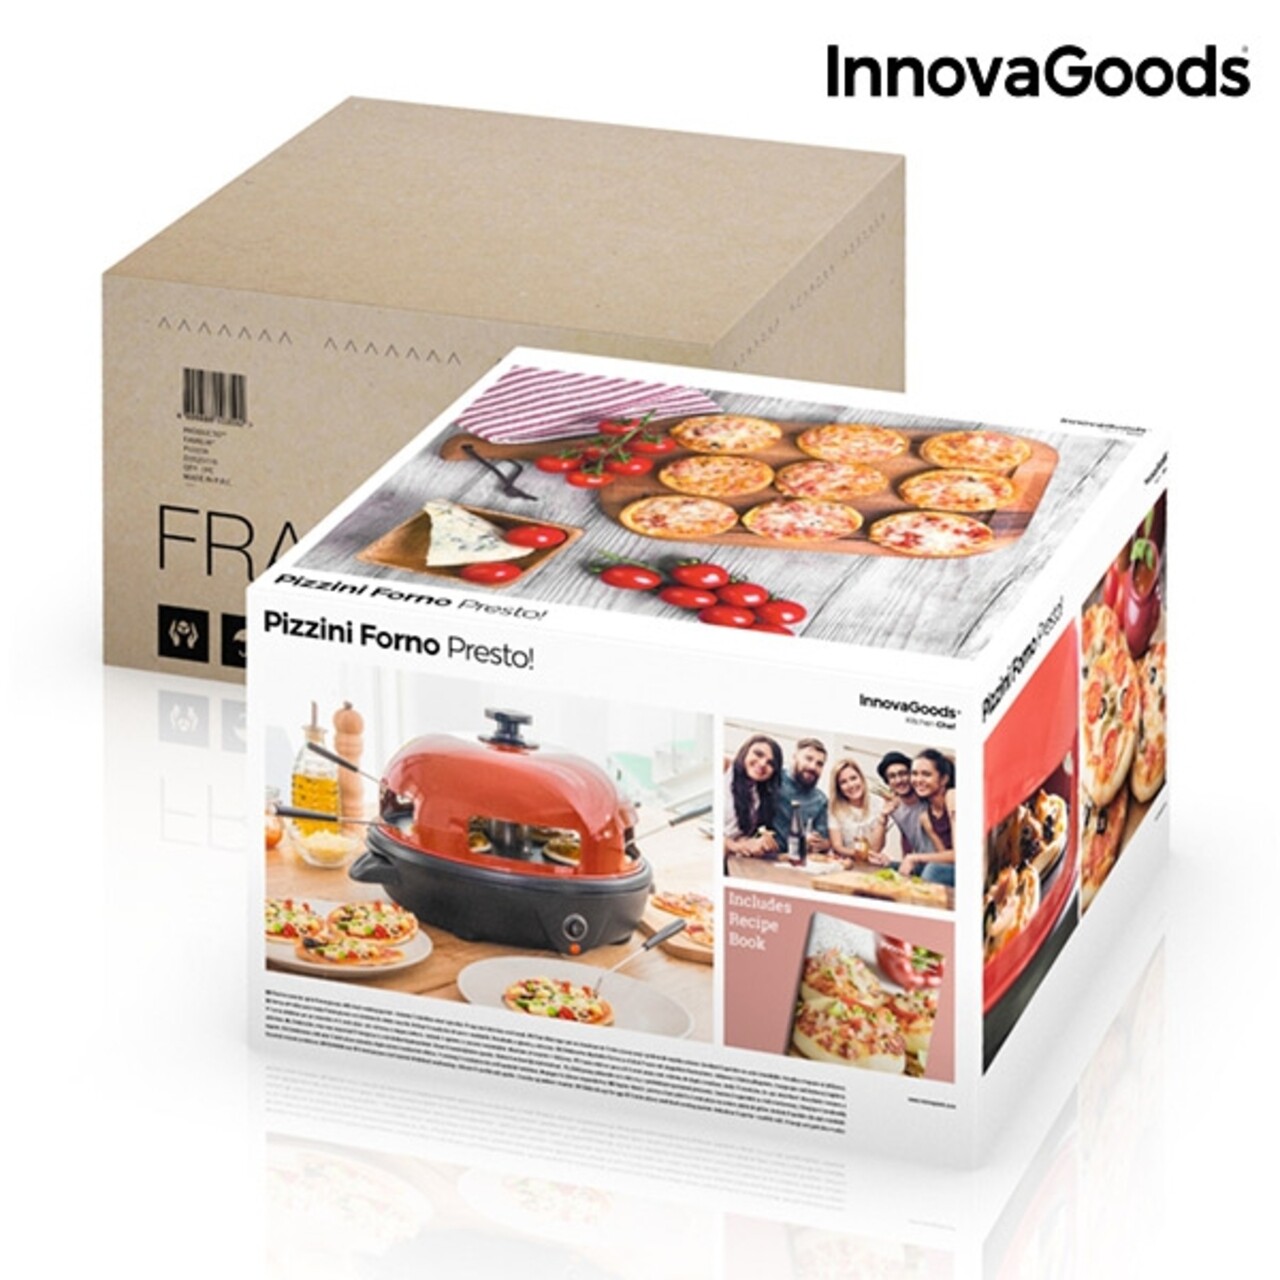 Cuptor electric pentru mini pizza cu carte de retete Presto, InnovaGoods, 700W, rosu/negru